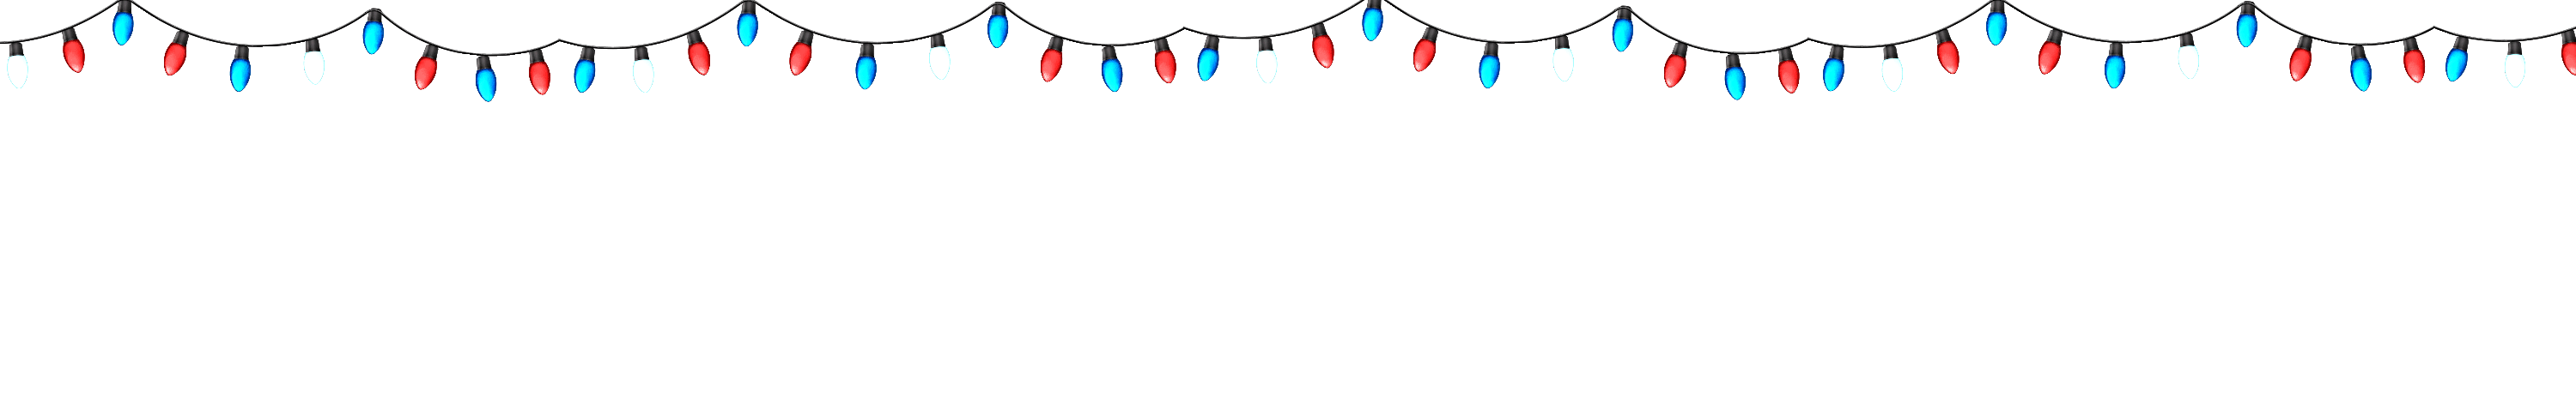 holiday banner overlay